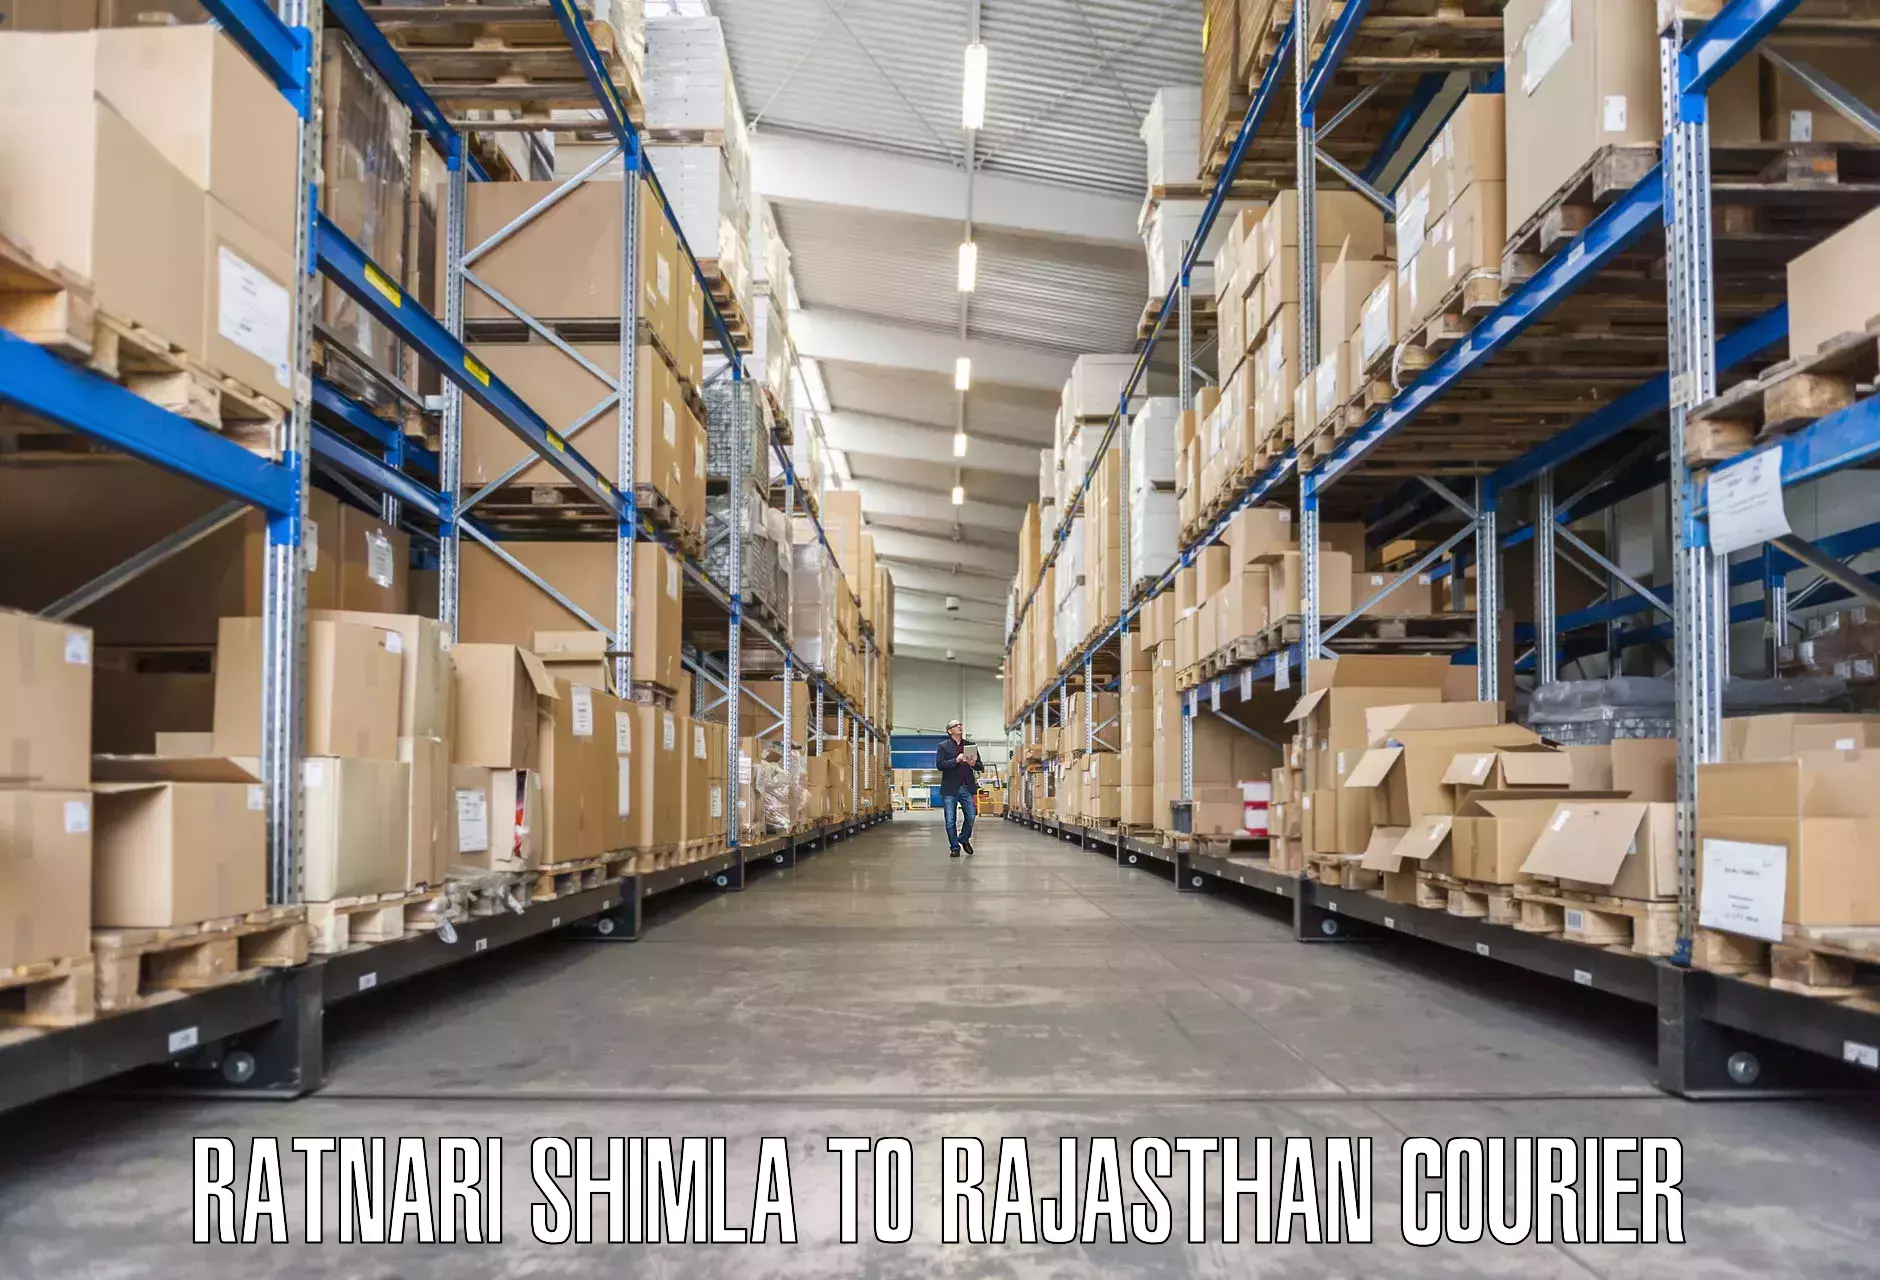 Efficient moving company Ratnari Shimla to Udaipur